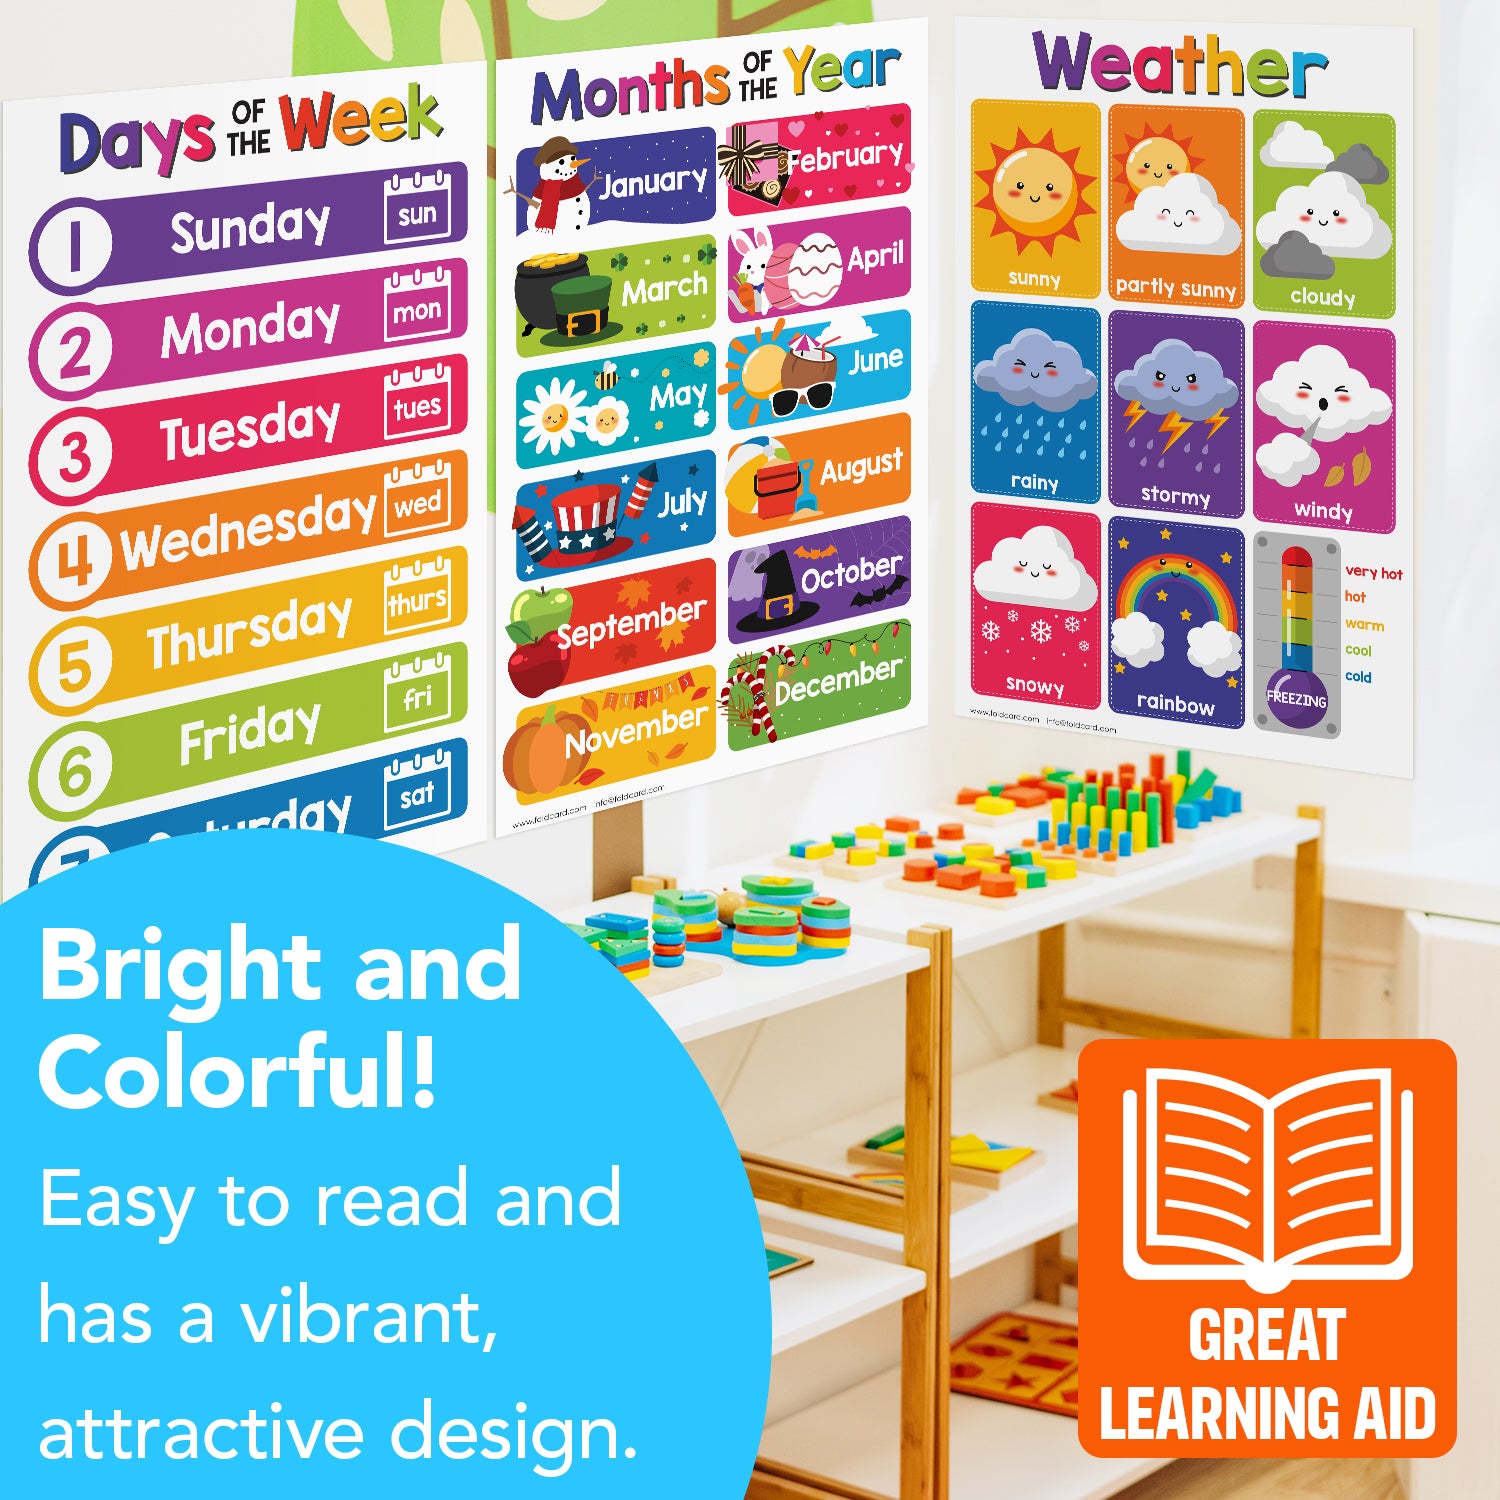 Bright Weather Chart | Preschool to Grade 1 | 11" x 17" | 5-Pack